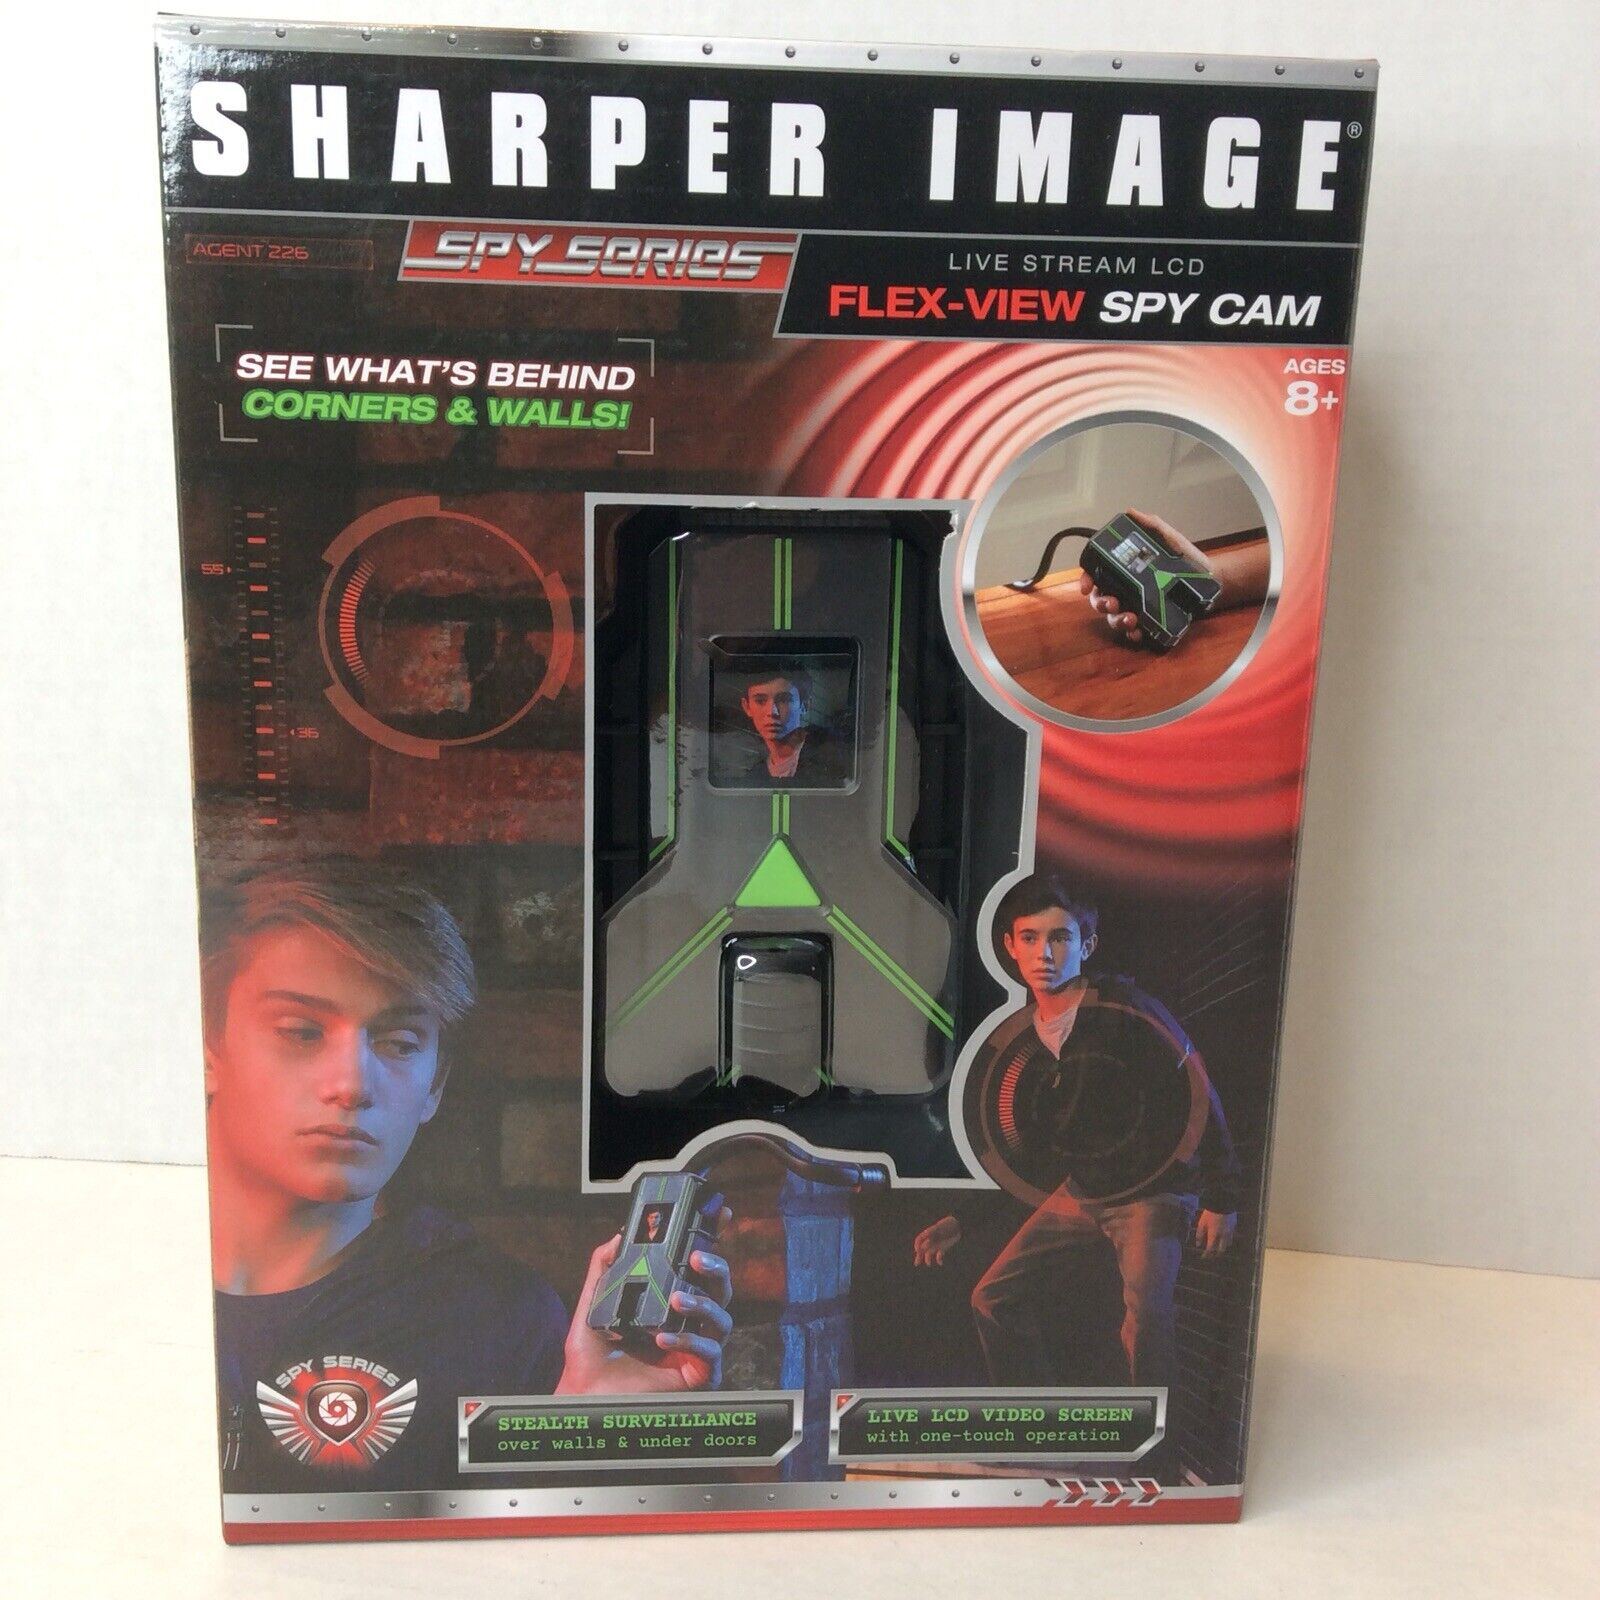 New Sharper Image Spy Series Flex-view Spy Cam Camera Live Stream Lcd